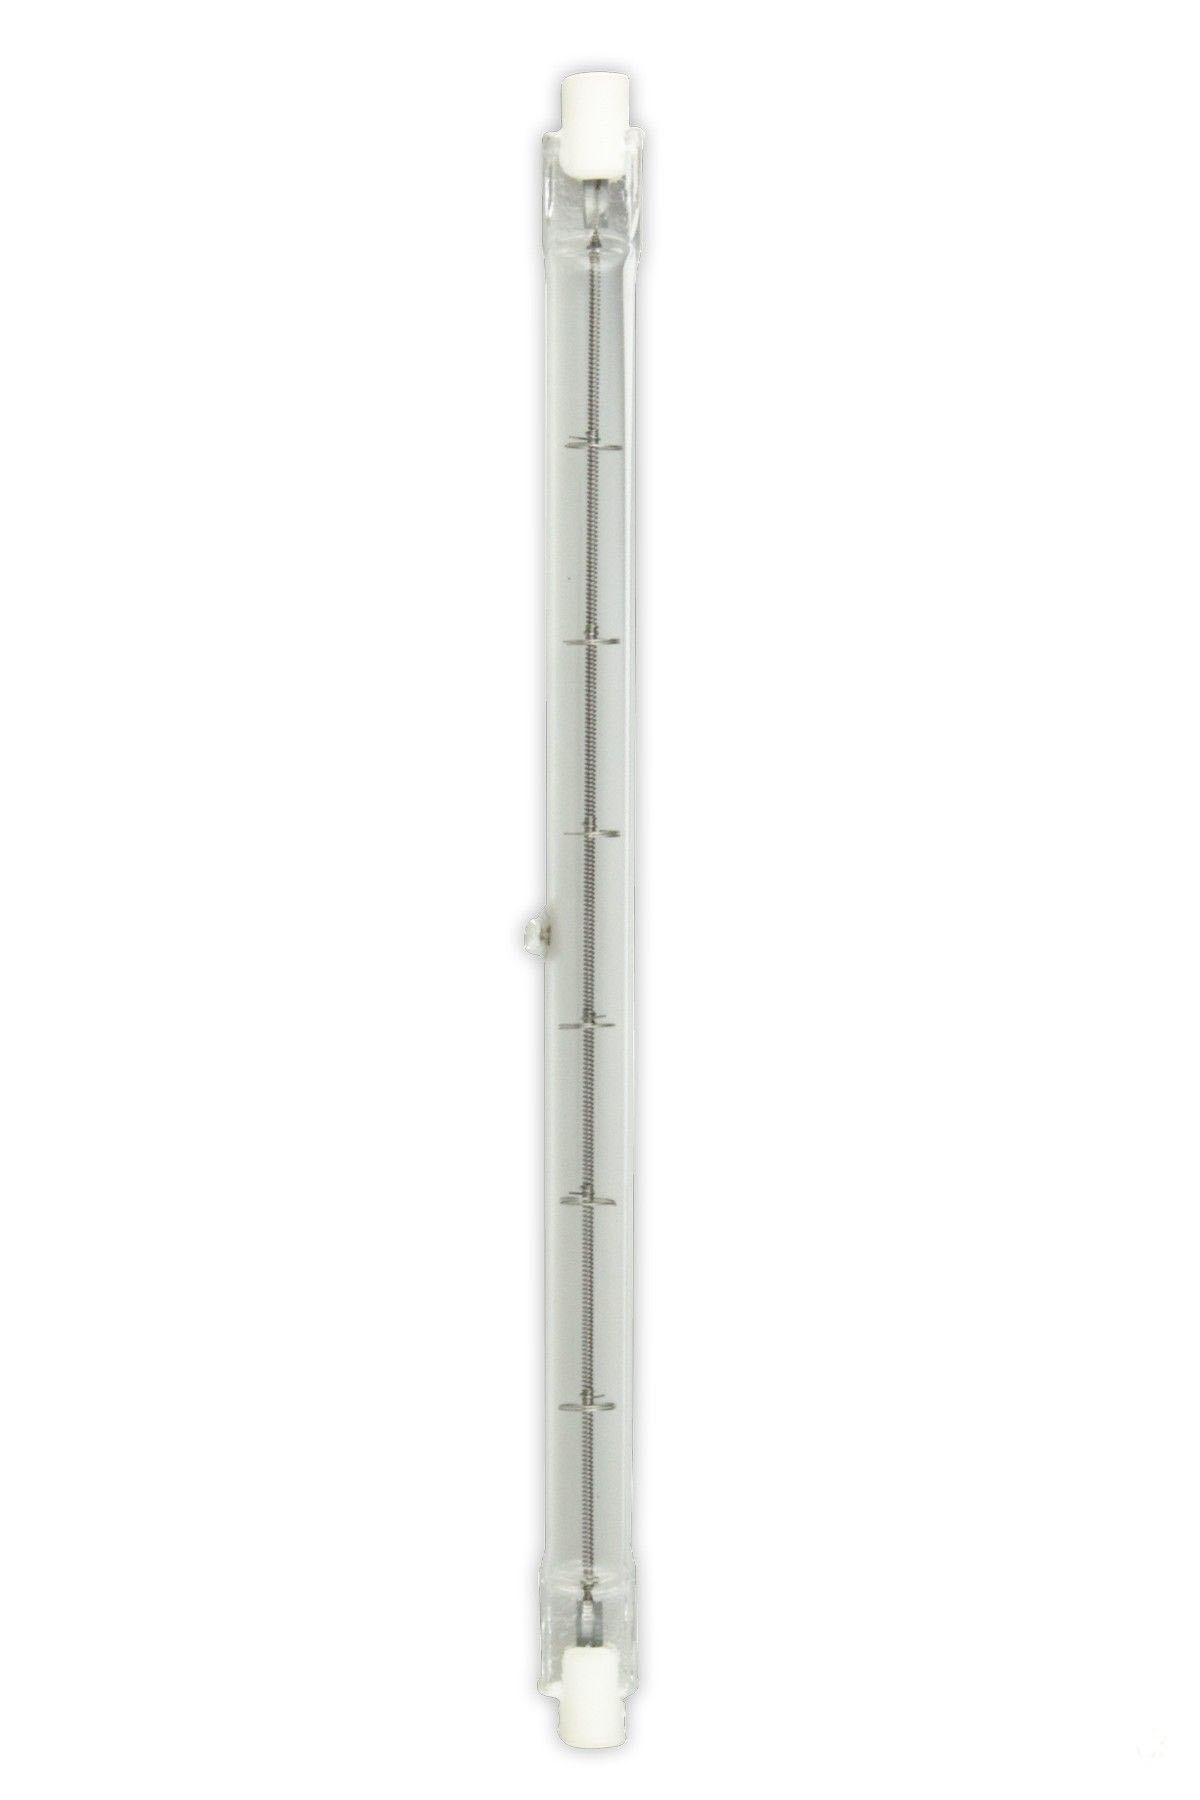 De layout viool drijvend Calex Halogeenlamp 240V 330W R7S 11 X 118mm - Verlichtingpaleis